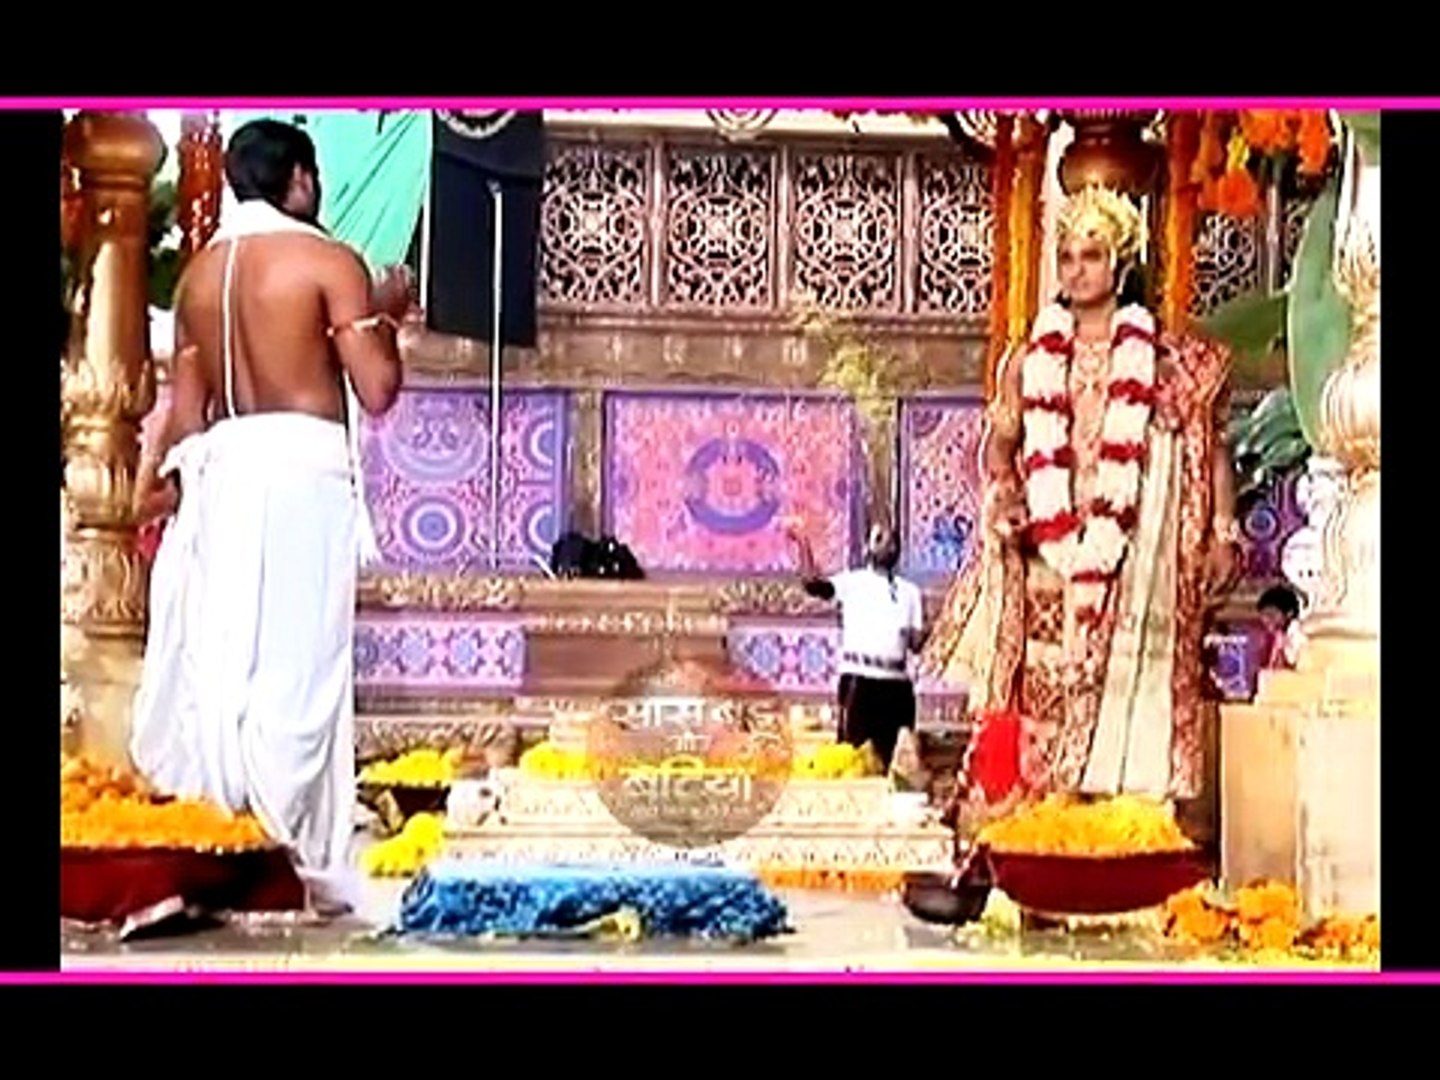 Ram Sita Wedding in Siya Ke Ram